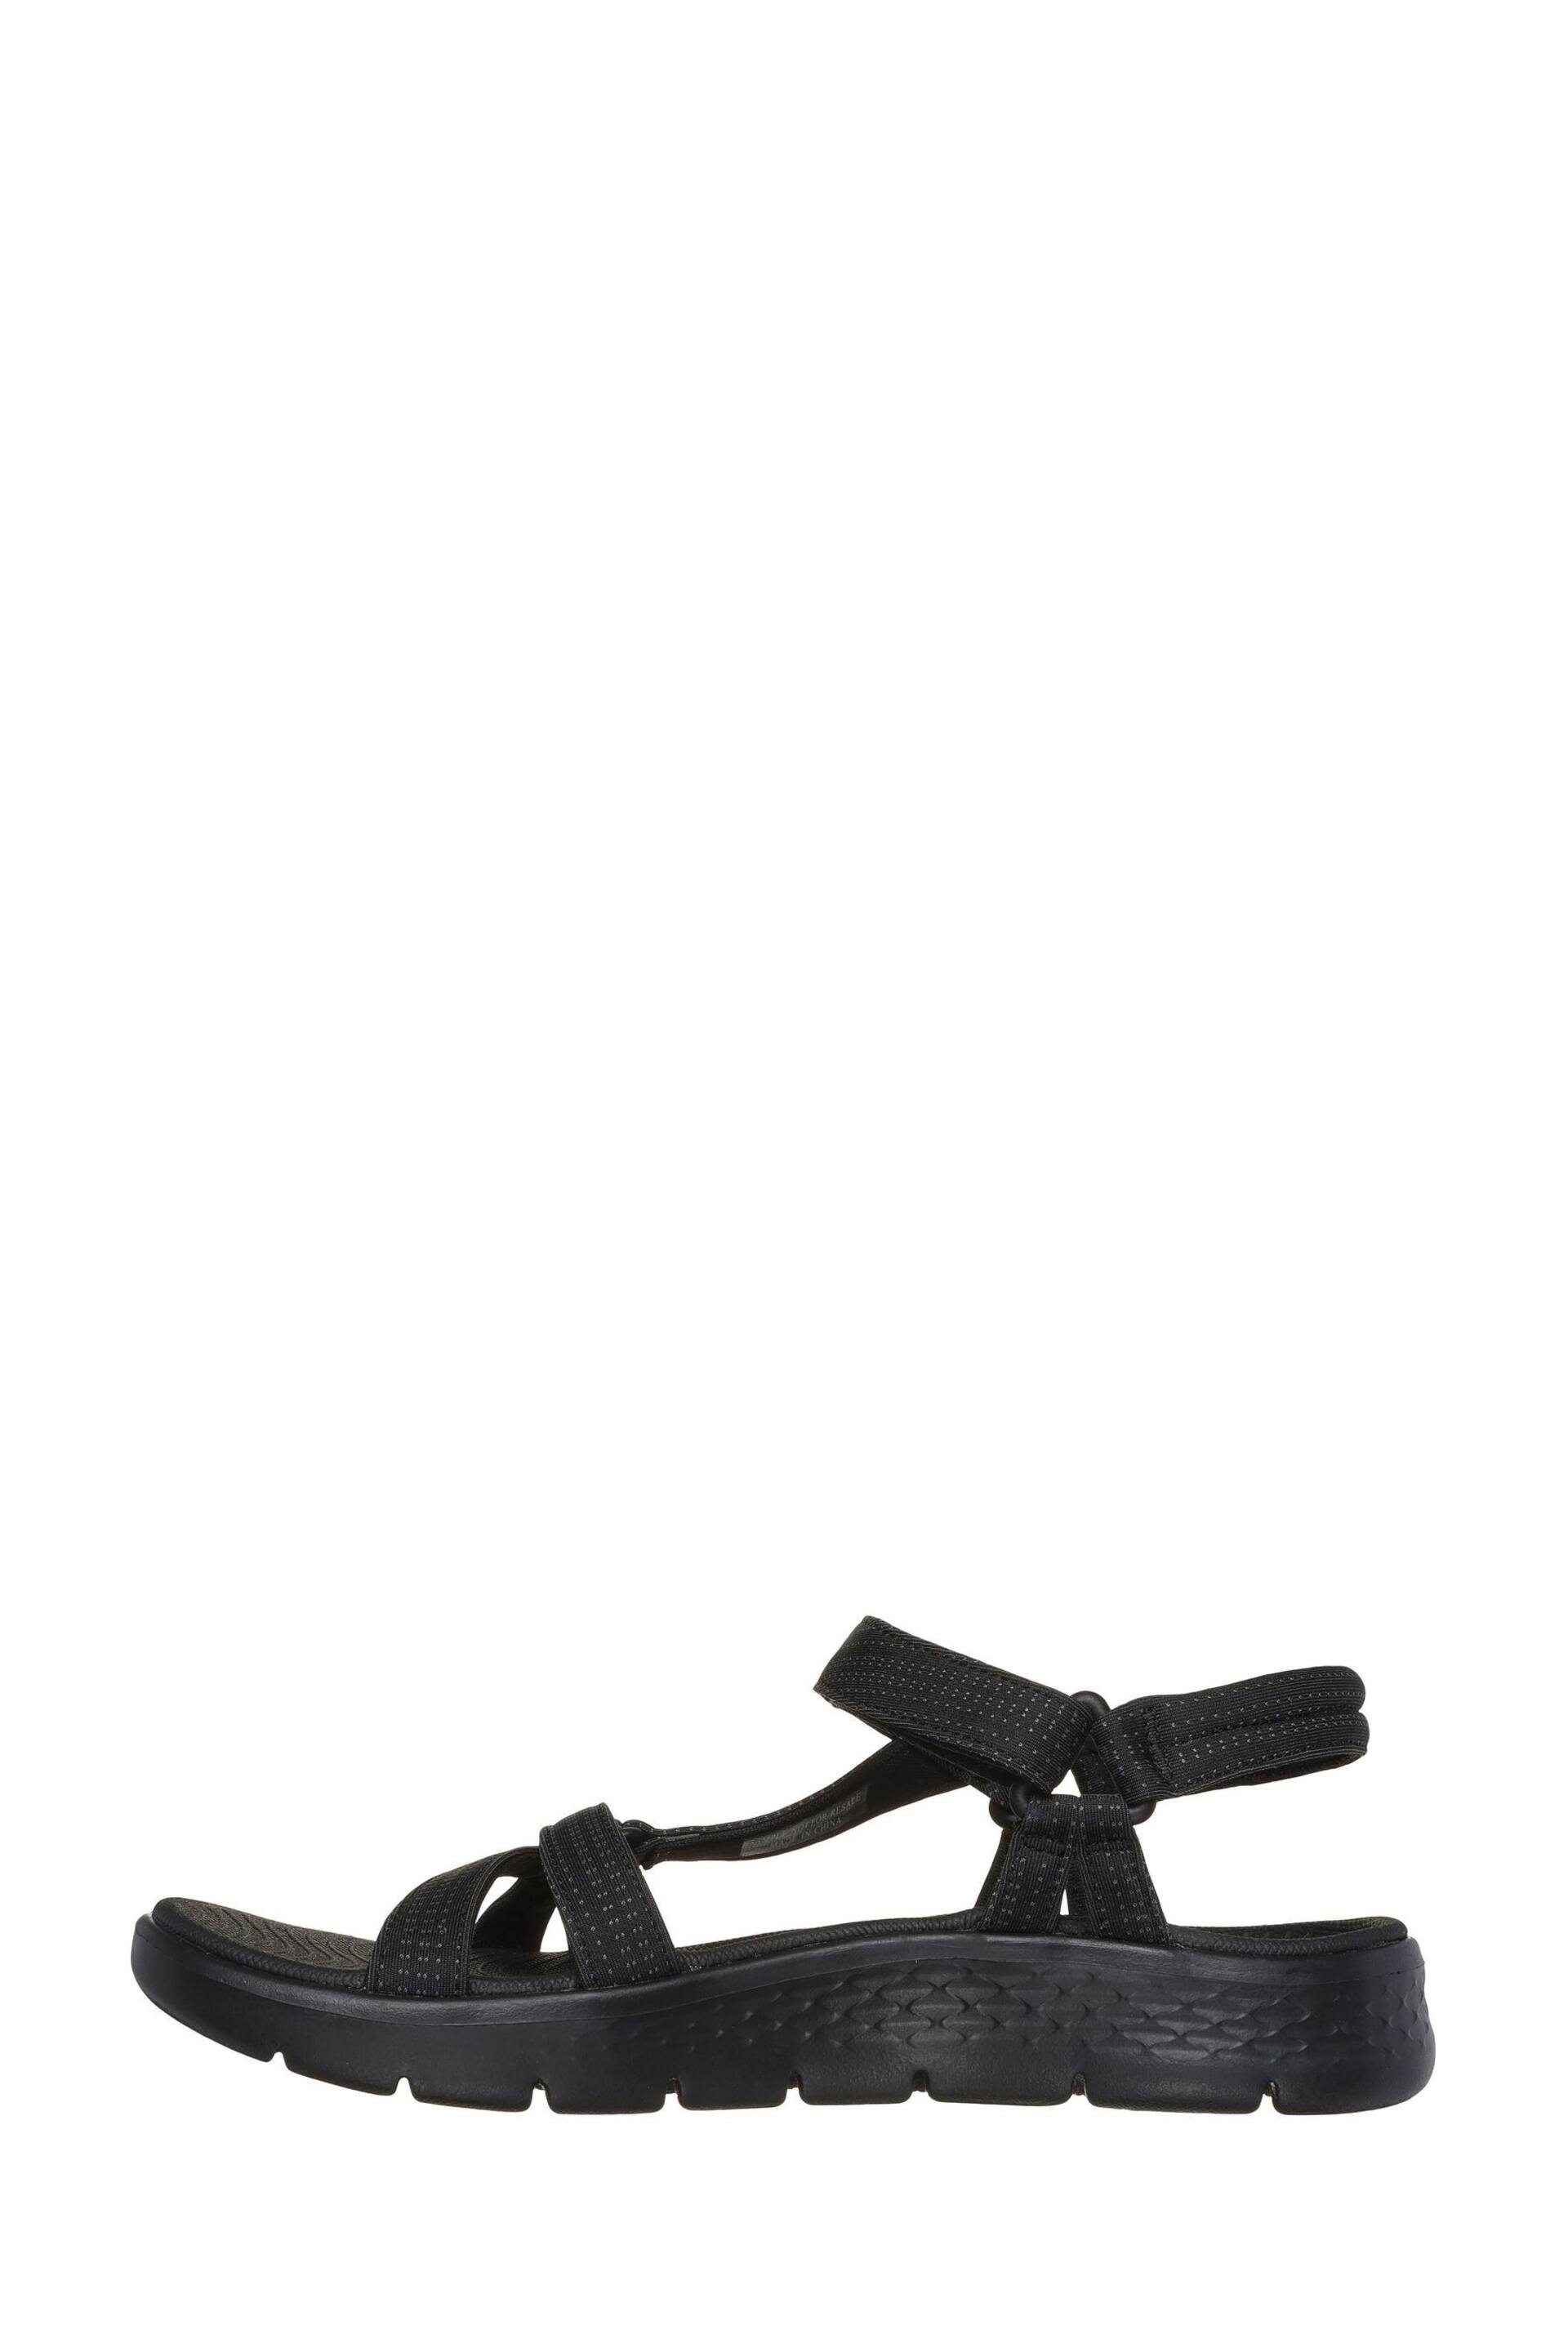 Skechers Black Go Walk Flex Sublime-X Sandals - Image 2 of 5